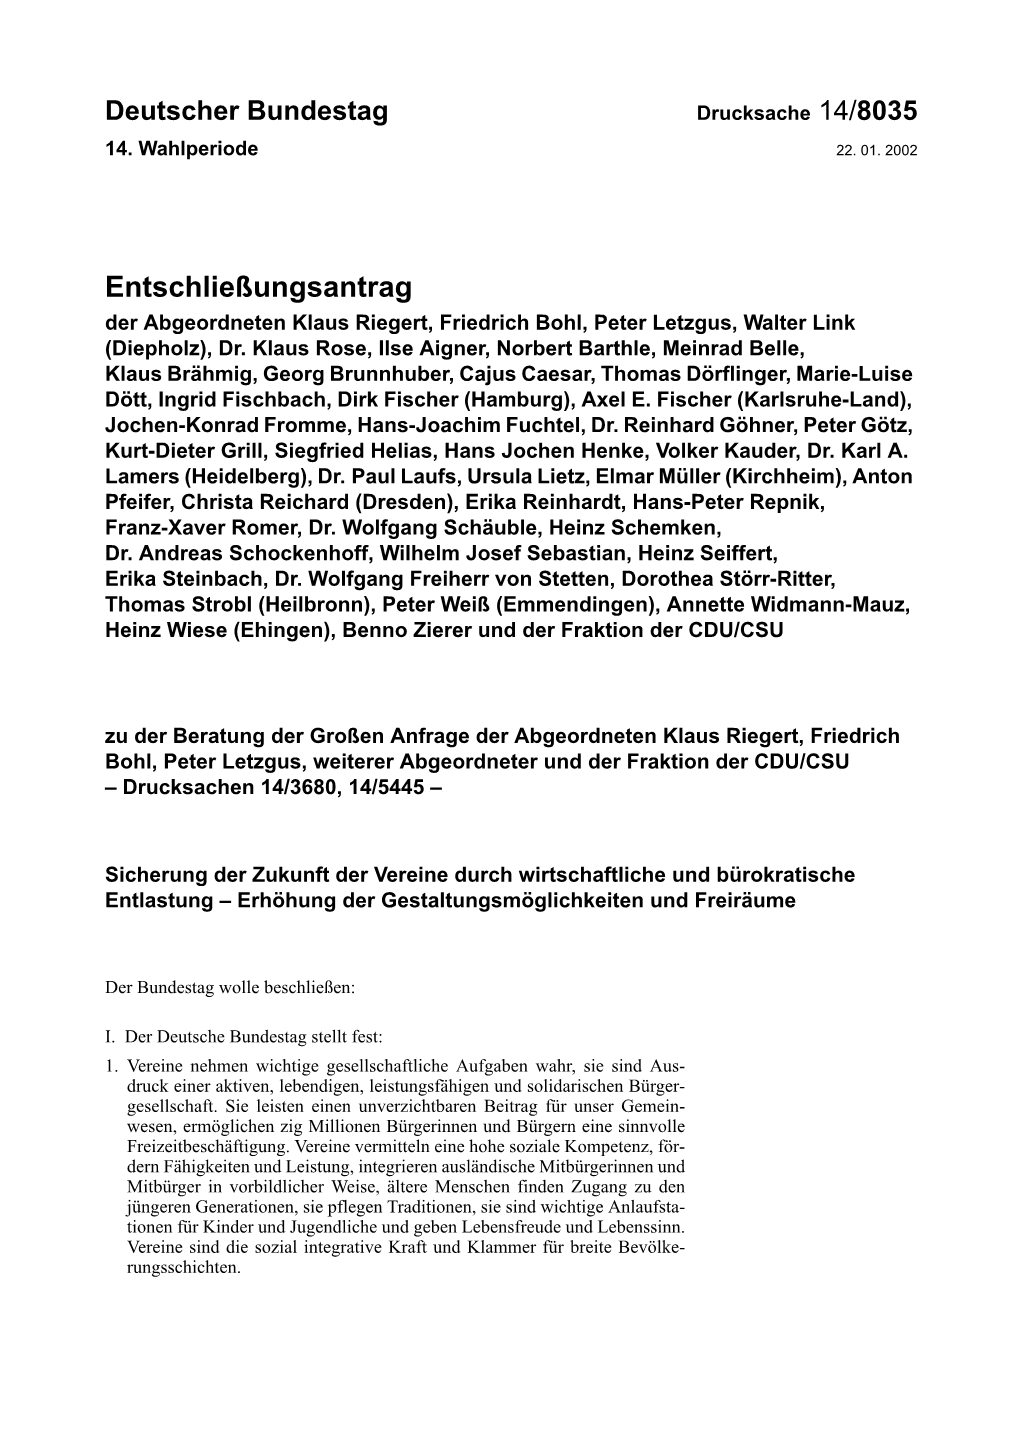 Entschließungsantrag Der Abgeordneten Klaus Riegert, Friedrich Bohl, Peter Letzgus, Walter Link (Diepholz), Dr